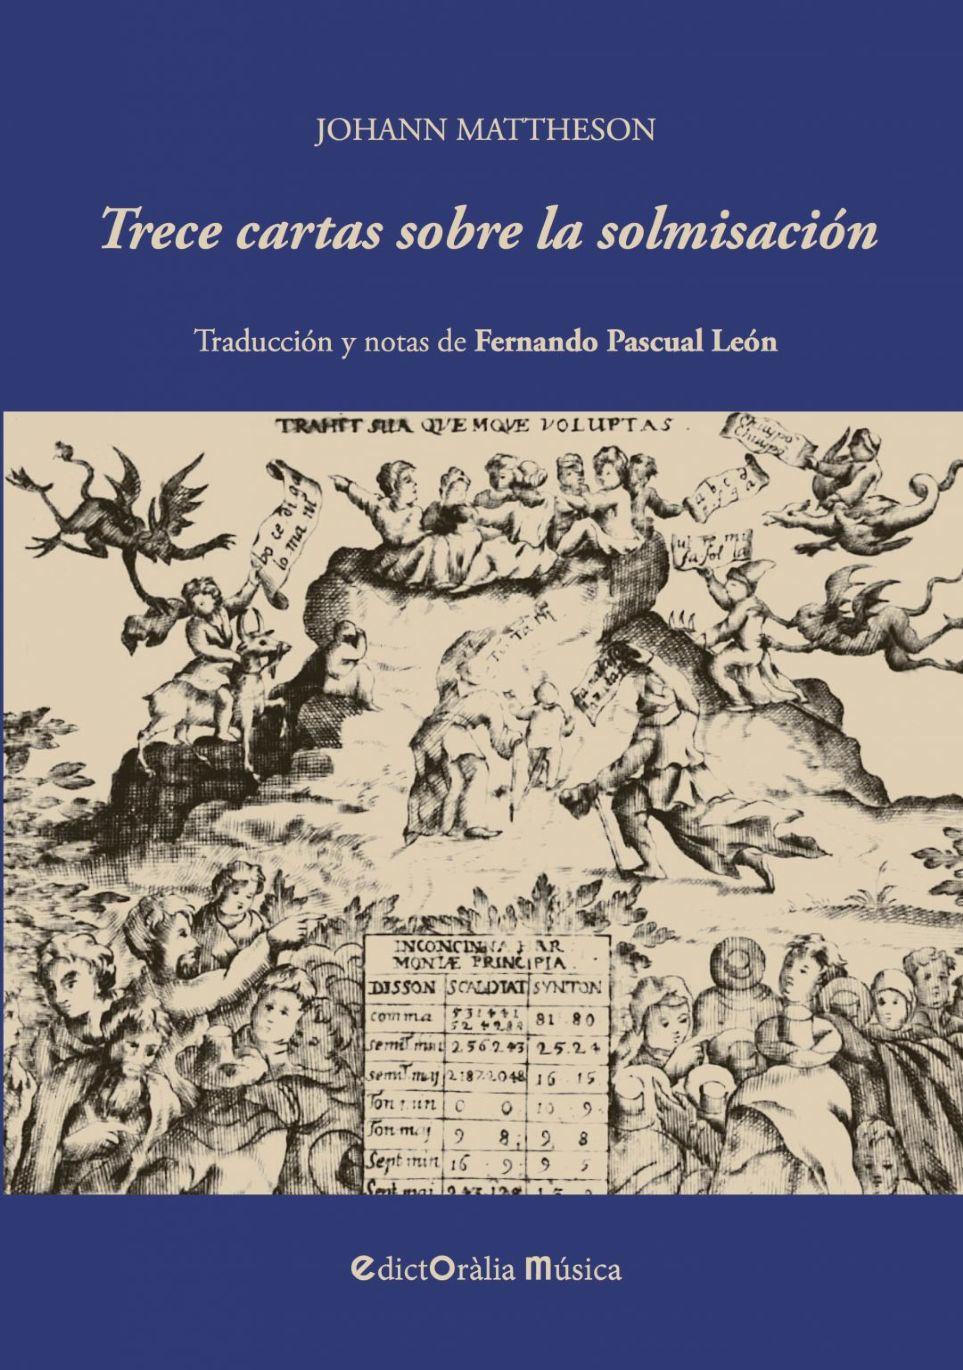 EdictOrlia publica Trece cartas sobre la solmisacin, de Johann Mattheson